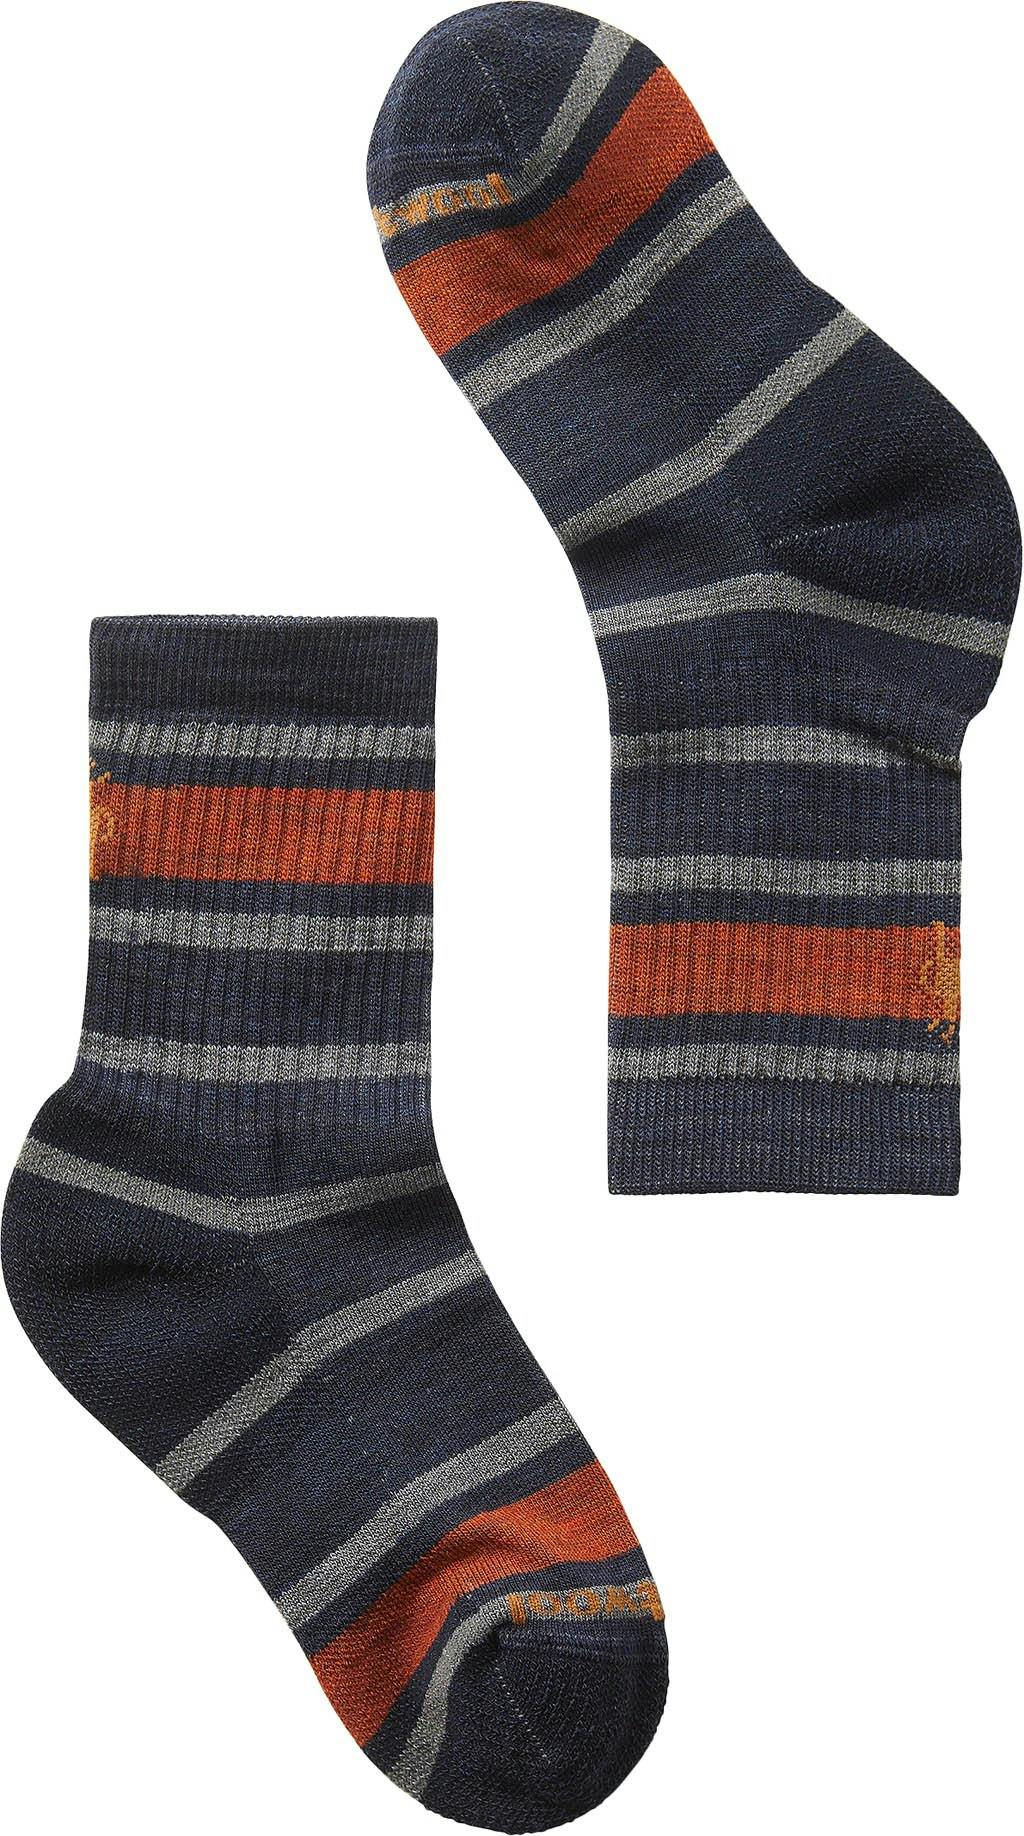 Product image for Classic Hike Light Cushion Striped Crew Socks - Kids